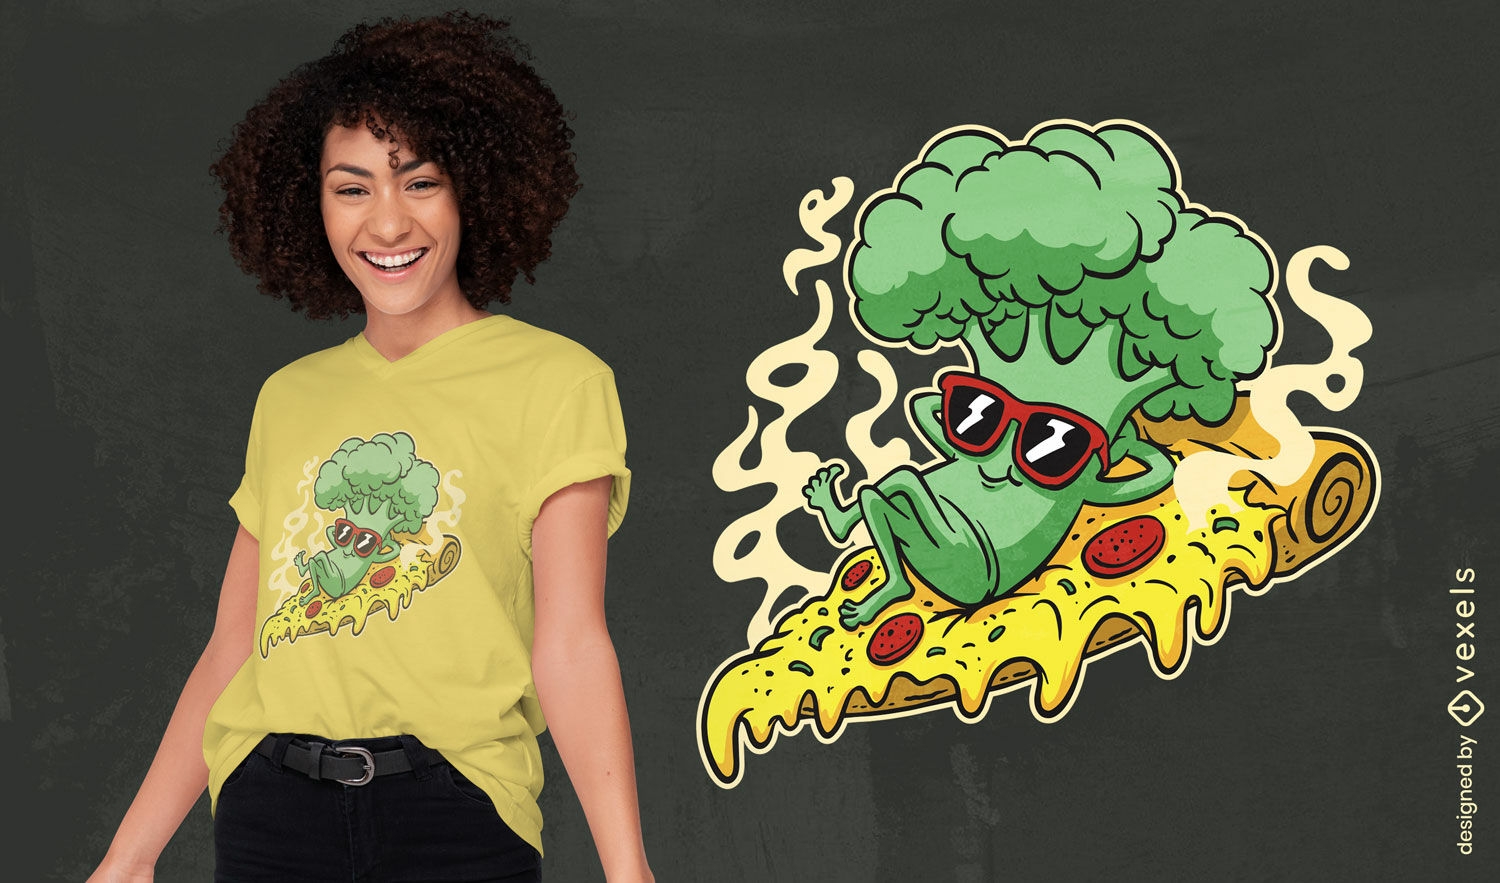 Broccoli pizza t-shirt design